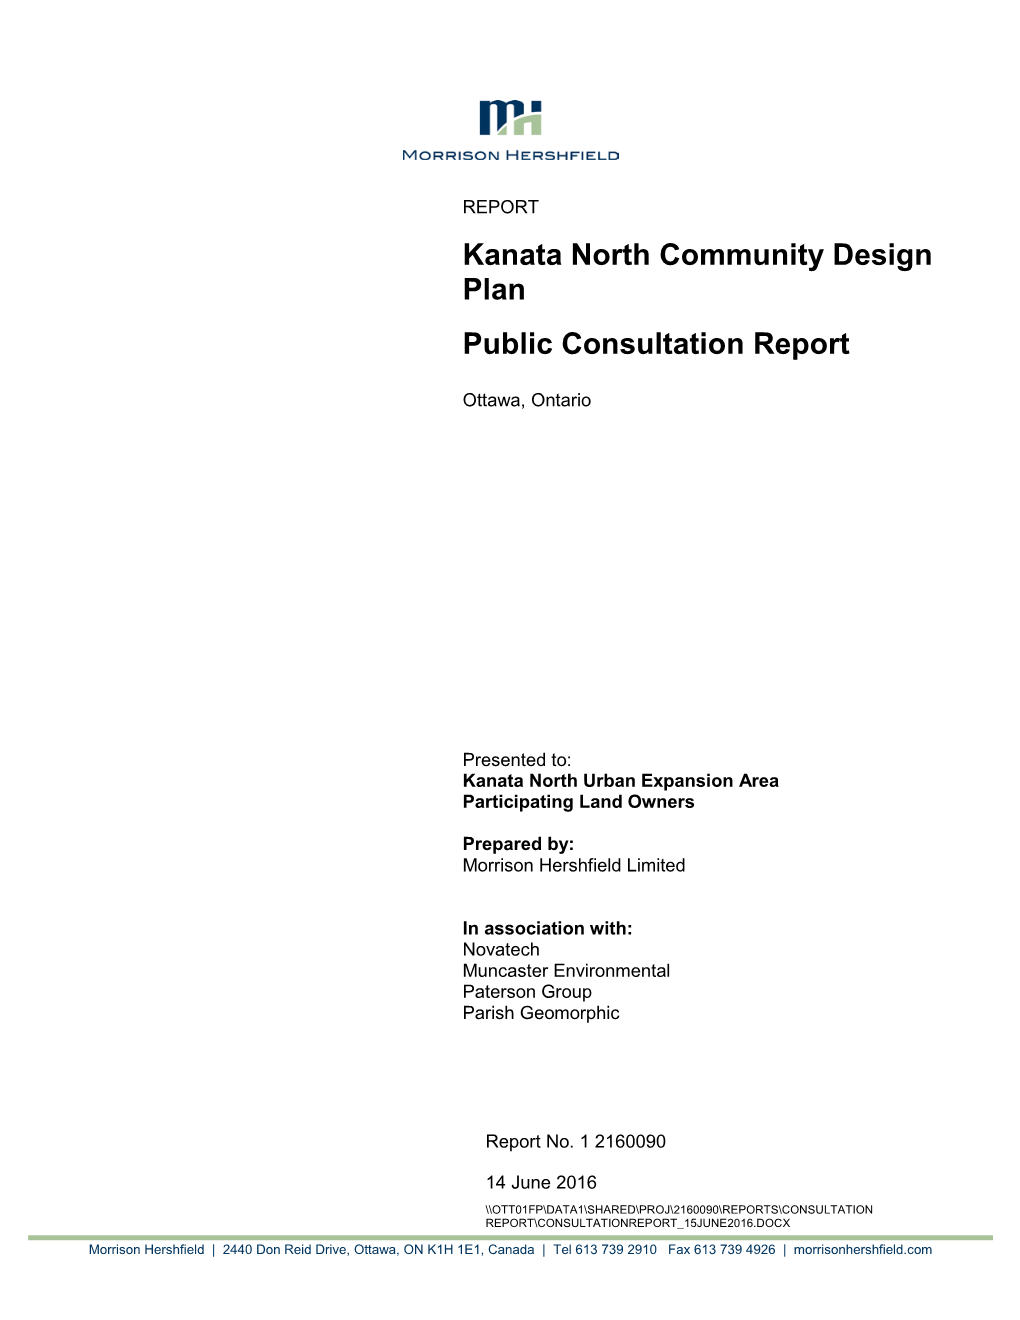 Kanata North Community Design Plan Public Consultation Report